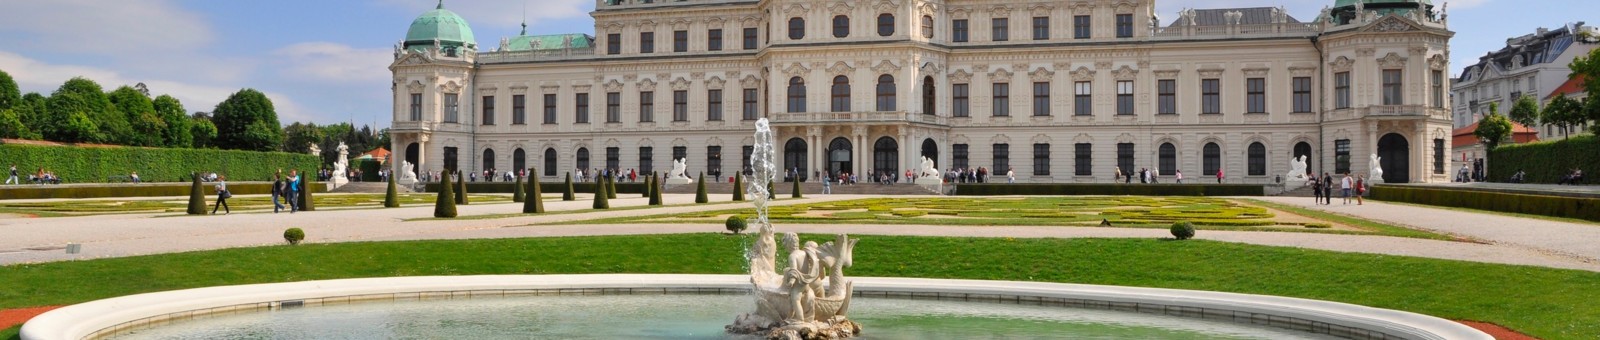     Belvedere Palace 